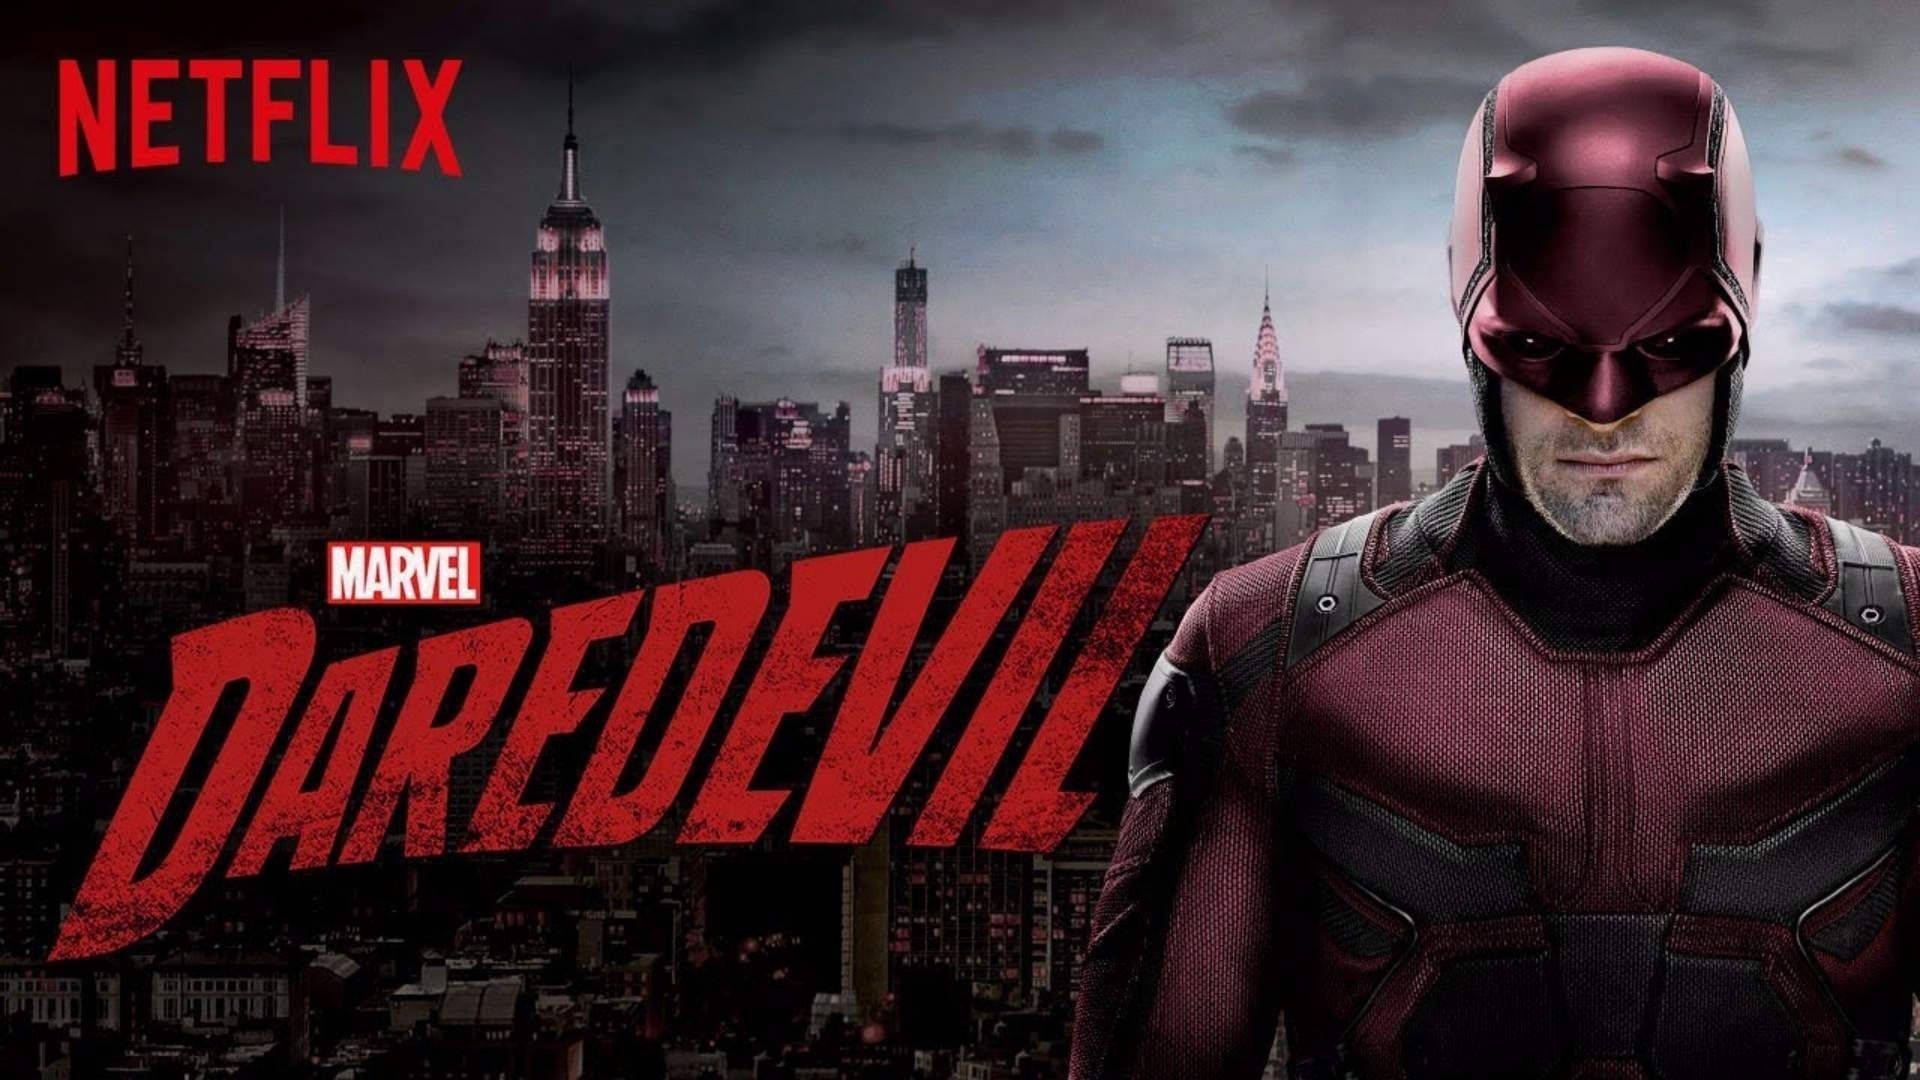 Netflix Daredevil Poster Background